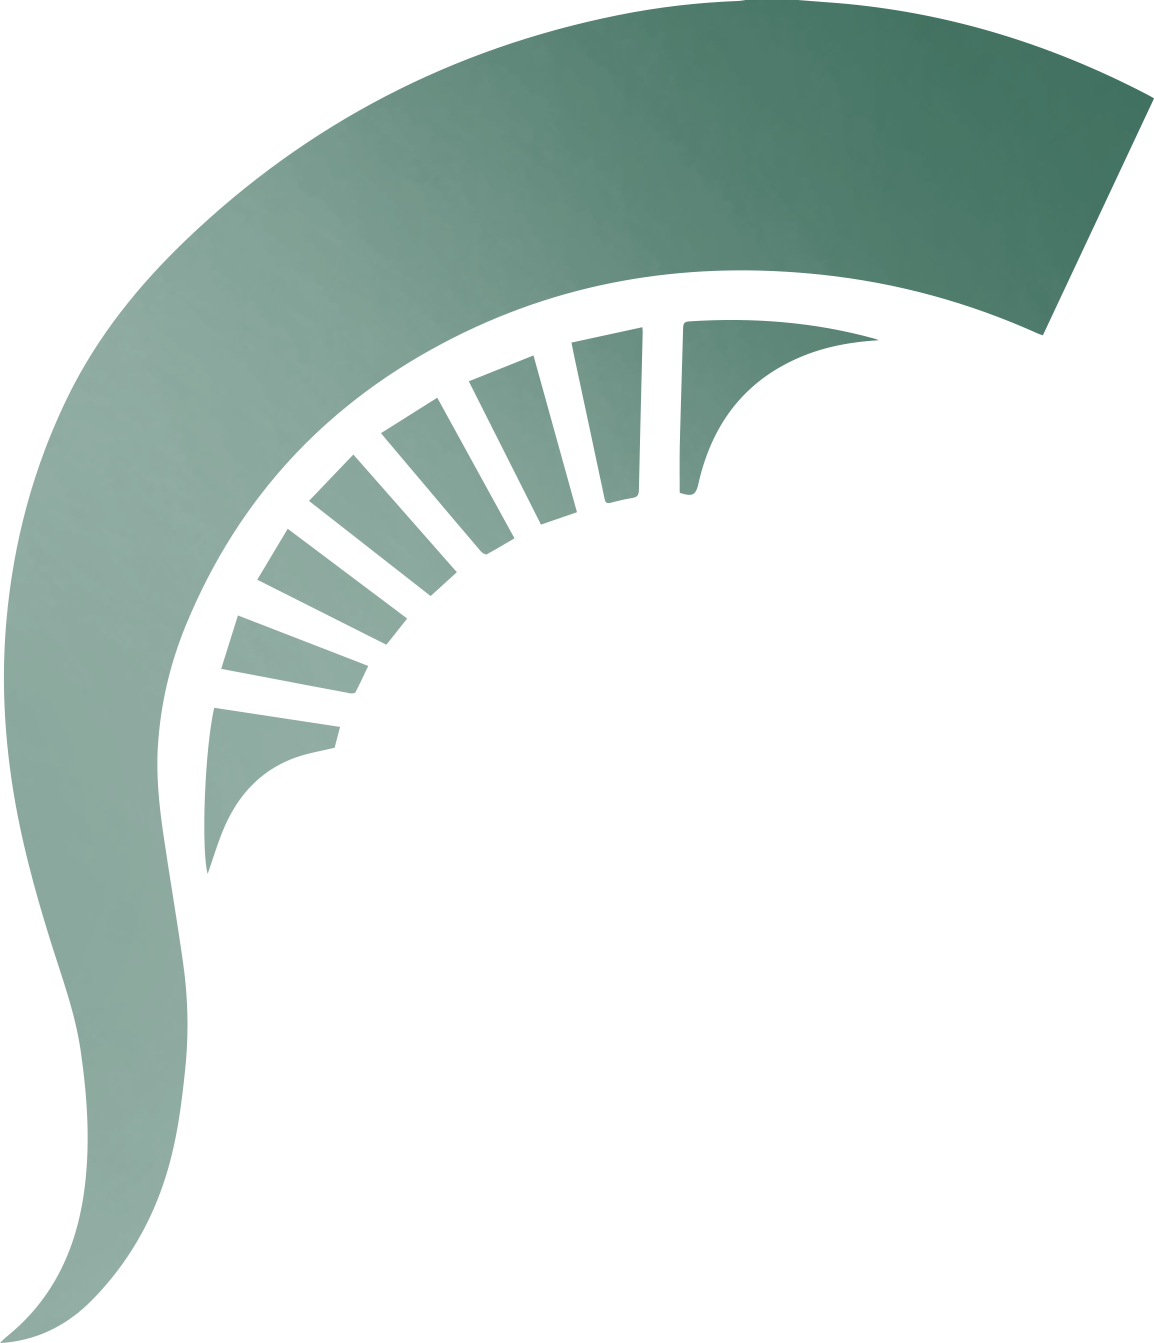 MSU Logo - Design and Visual Identity | The MSU Brand | Michigan State University